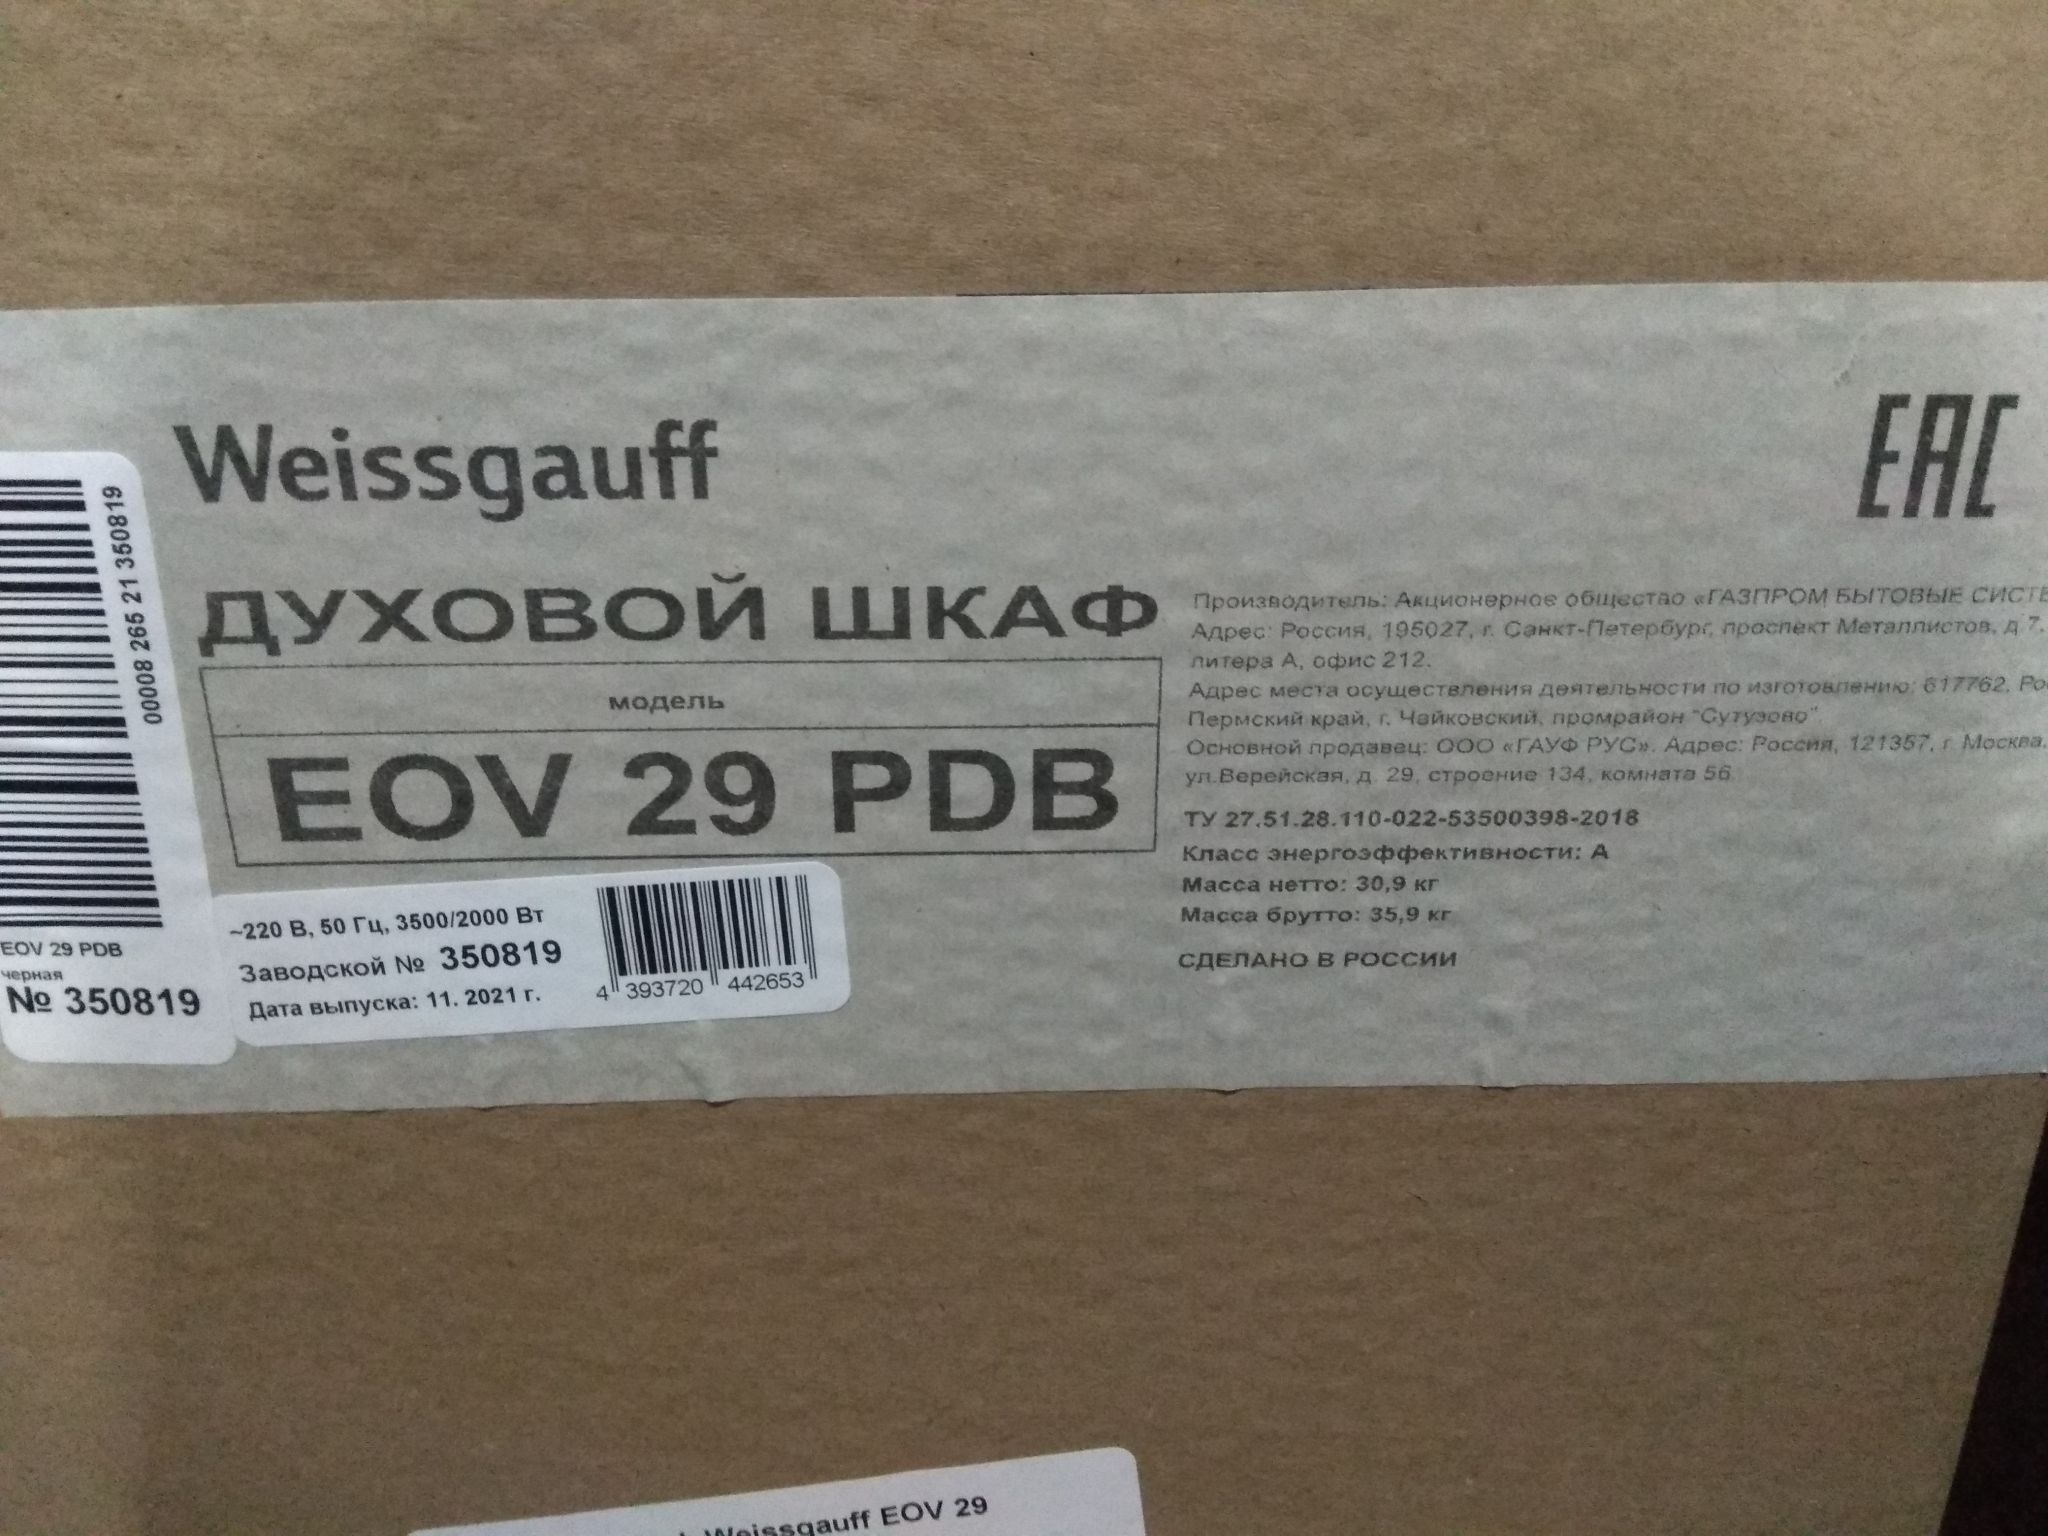 Weissgauff сайт спб. Вайсгауф eov29 PDB. EOV 29 PDB. Духовой шкаф Weissgauff черный. Weissgauff Страна производитель.